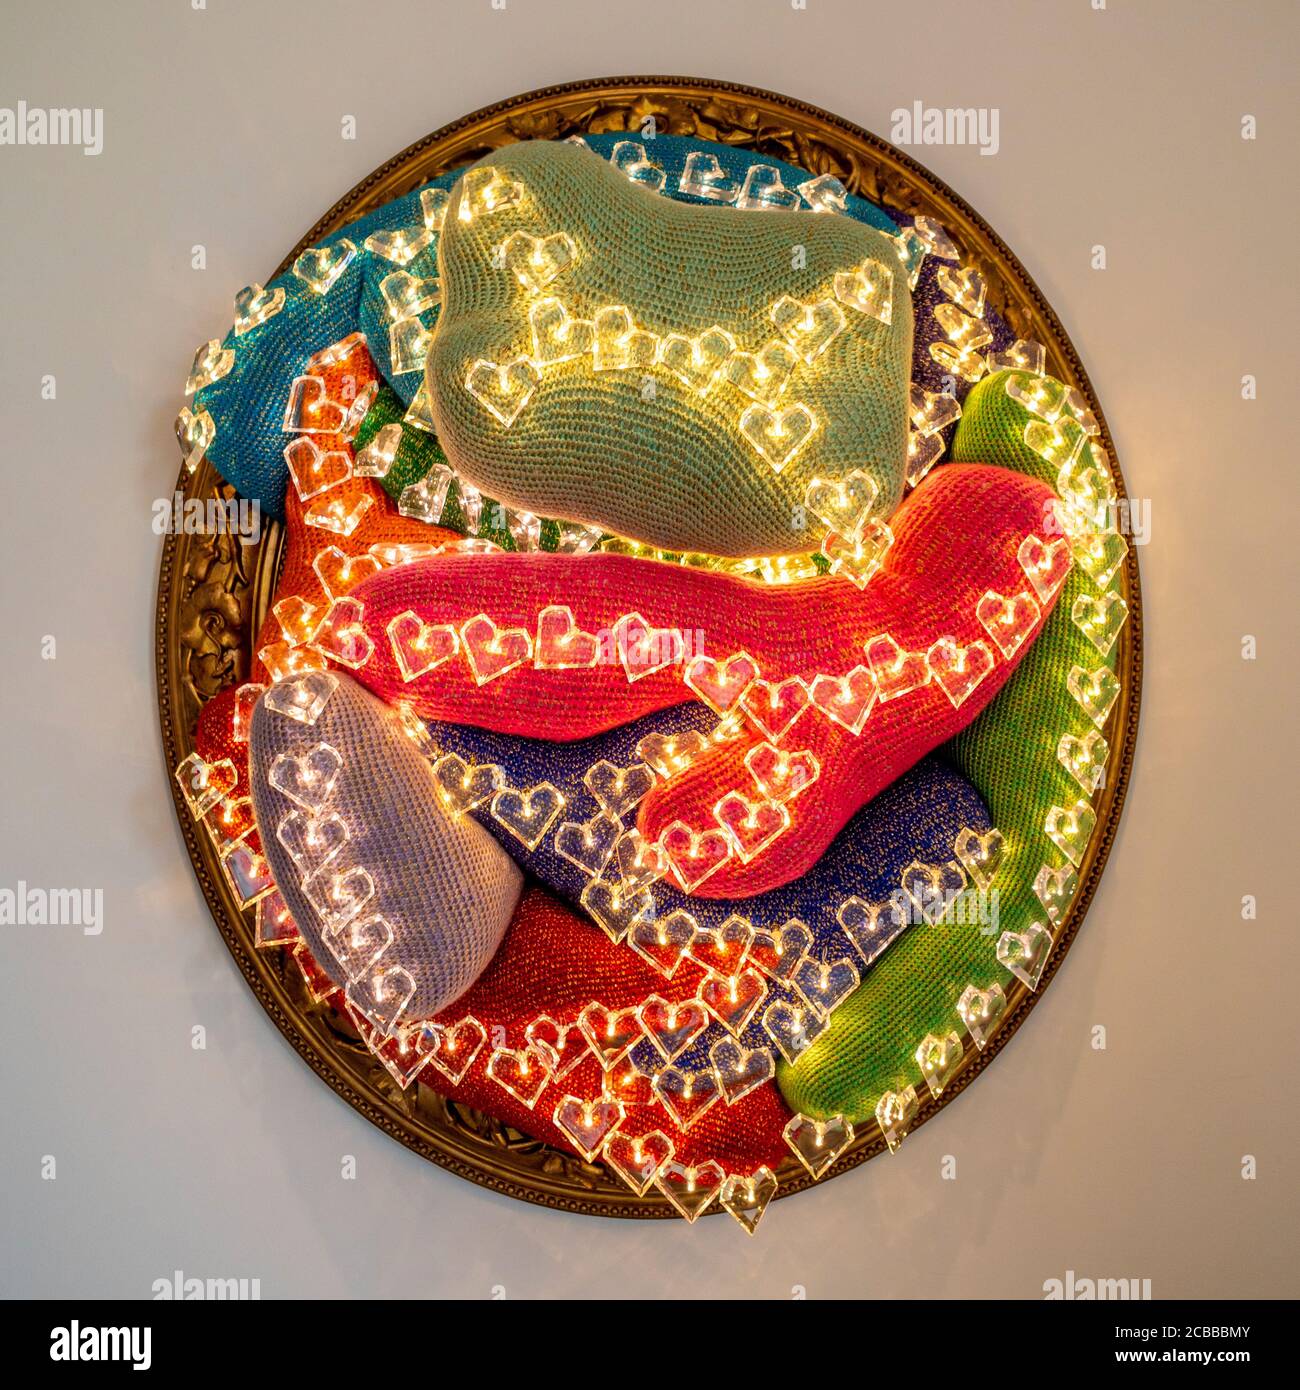 Heart Break 2015 by Joana Vasconcelos. A crocheted art installation in an oval frame, illuminted with heart shaped LED lights. Stock Photo